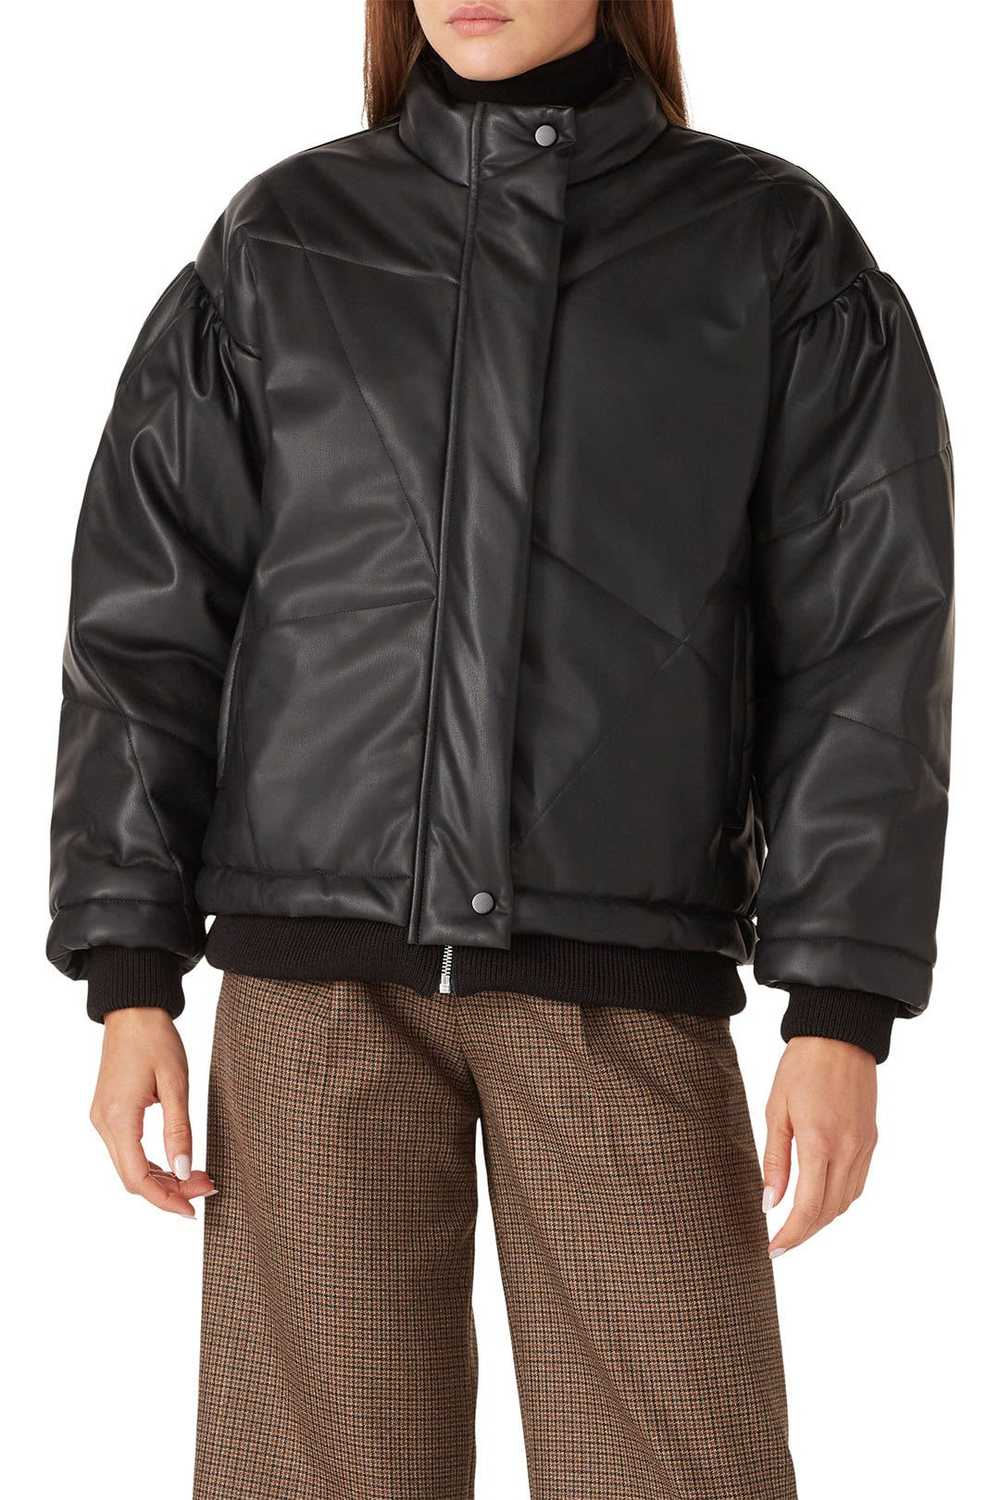 Sea New York Black Faux Leather Puff Jacket - image 2